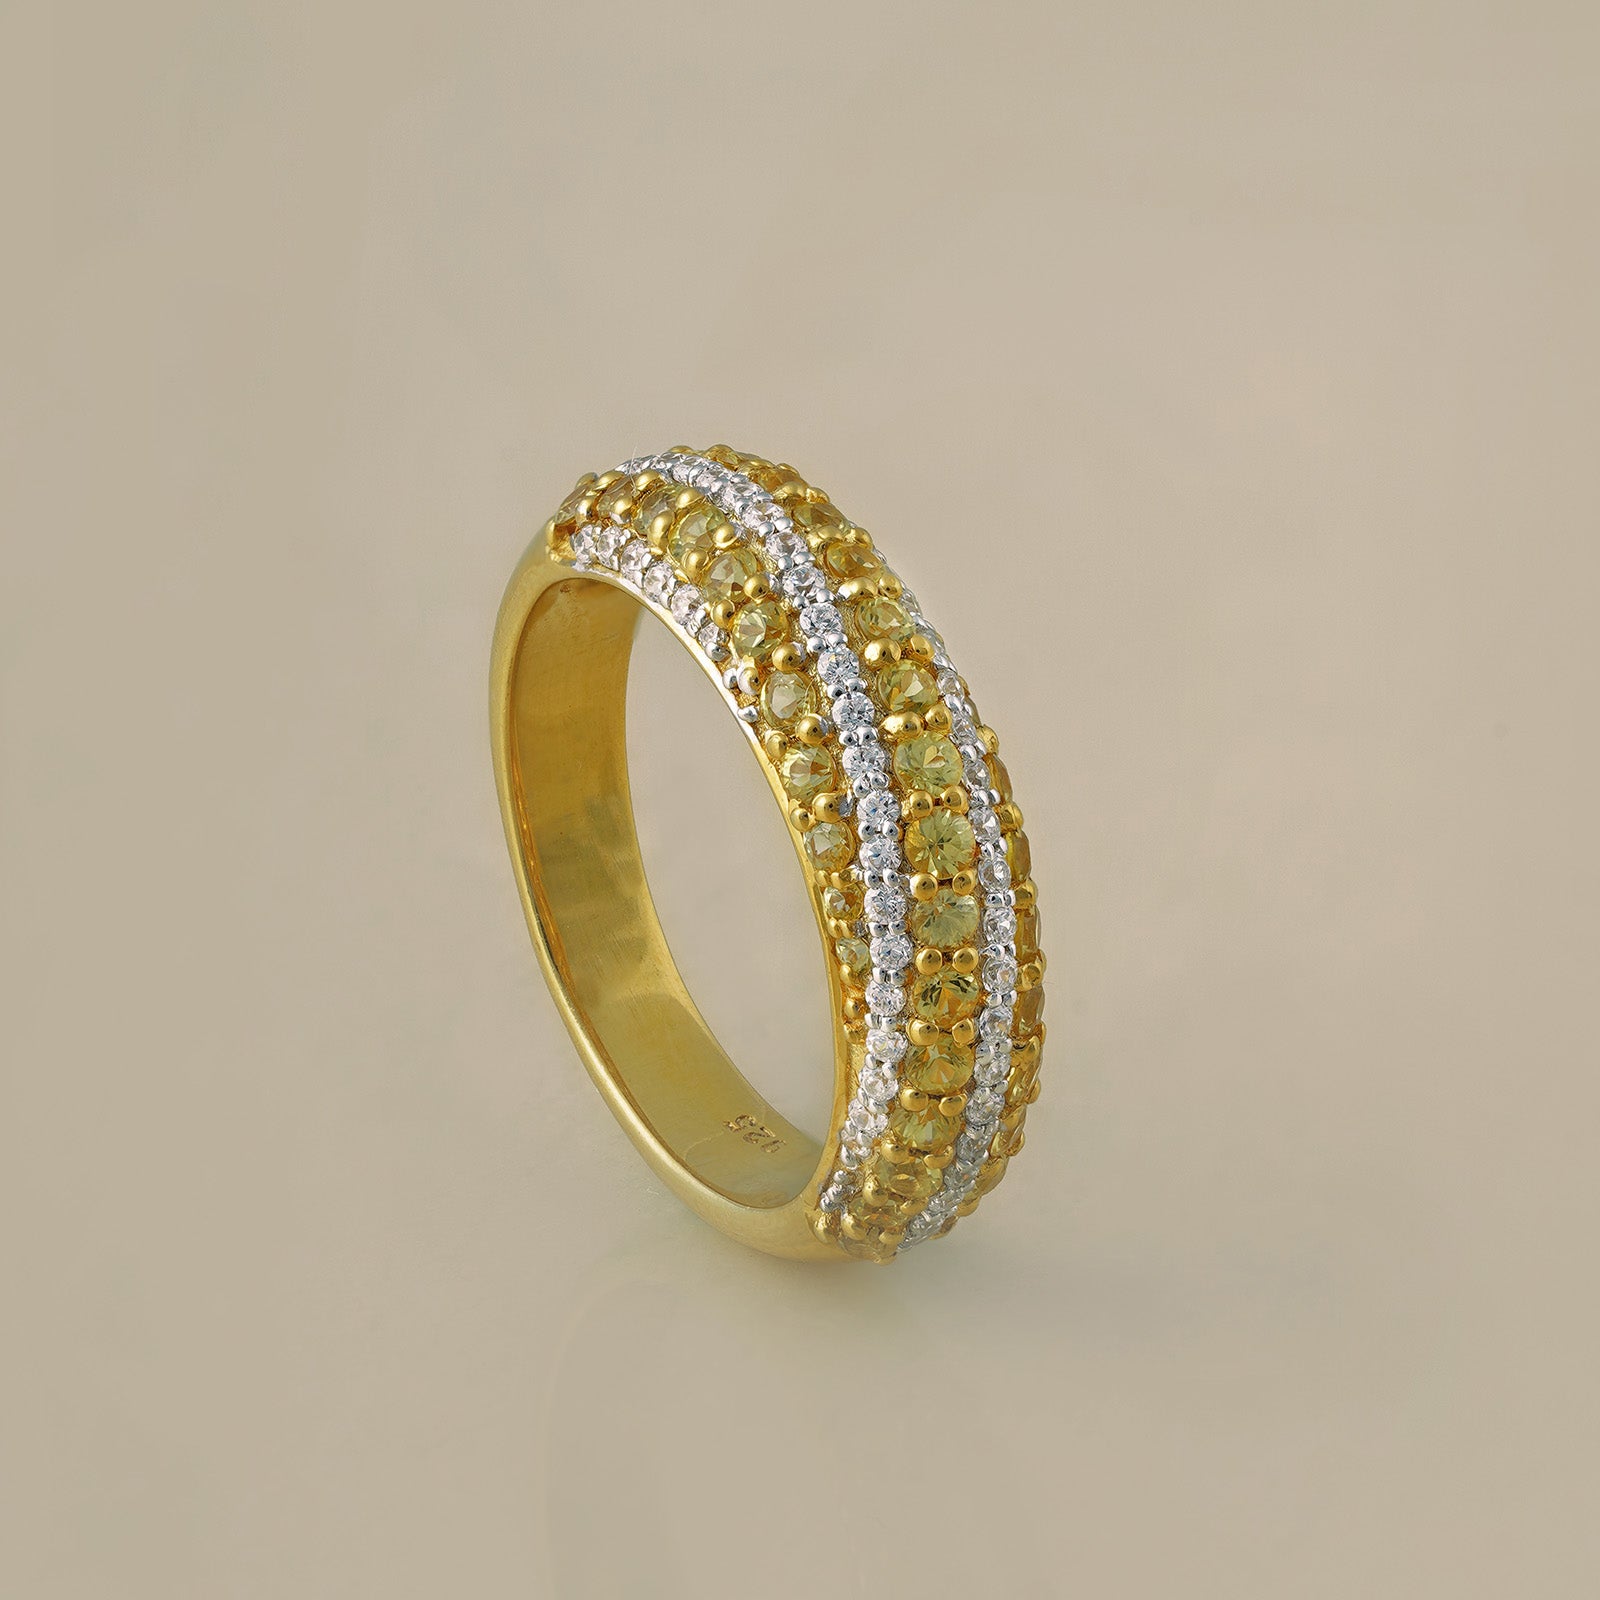 Susan Yellow Sapphire Ring